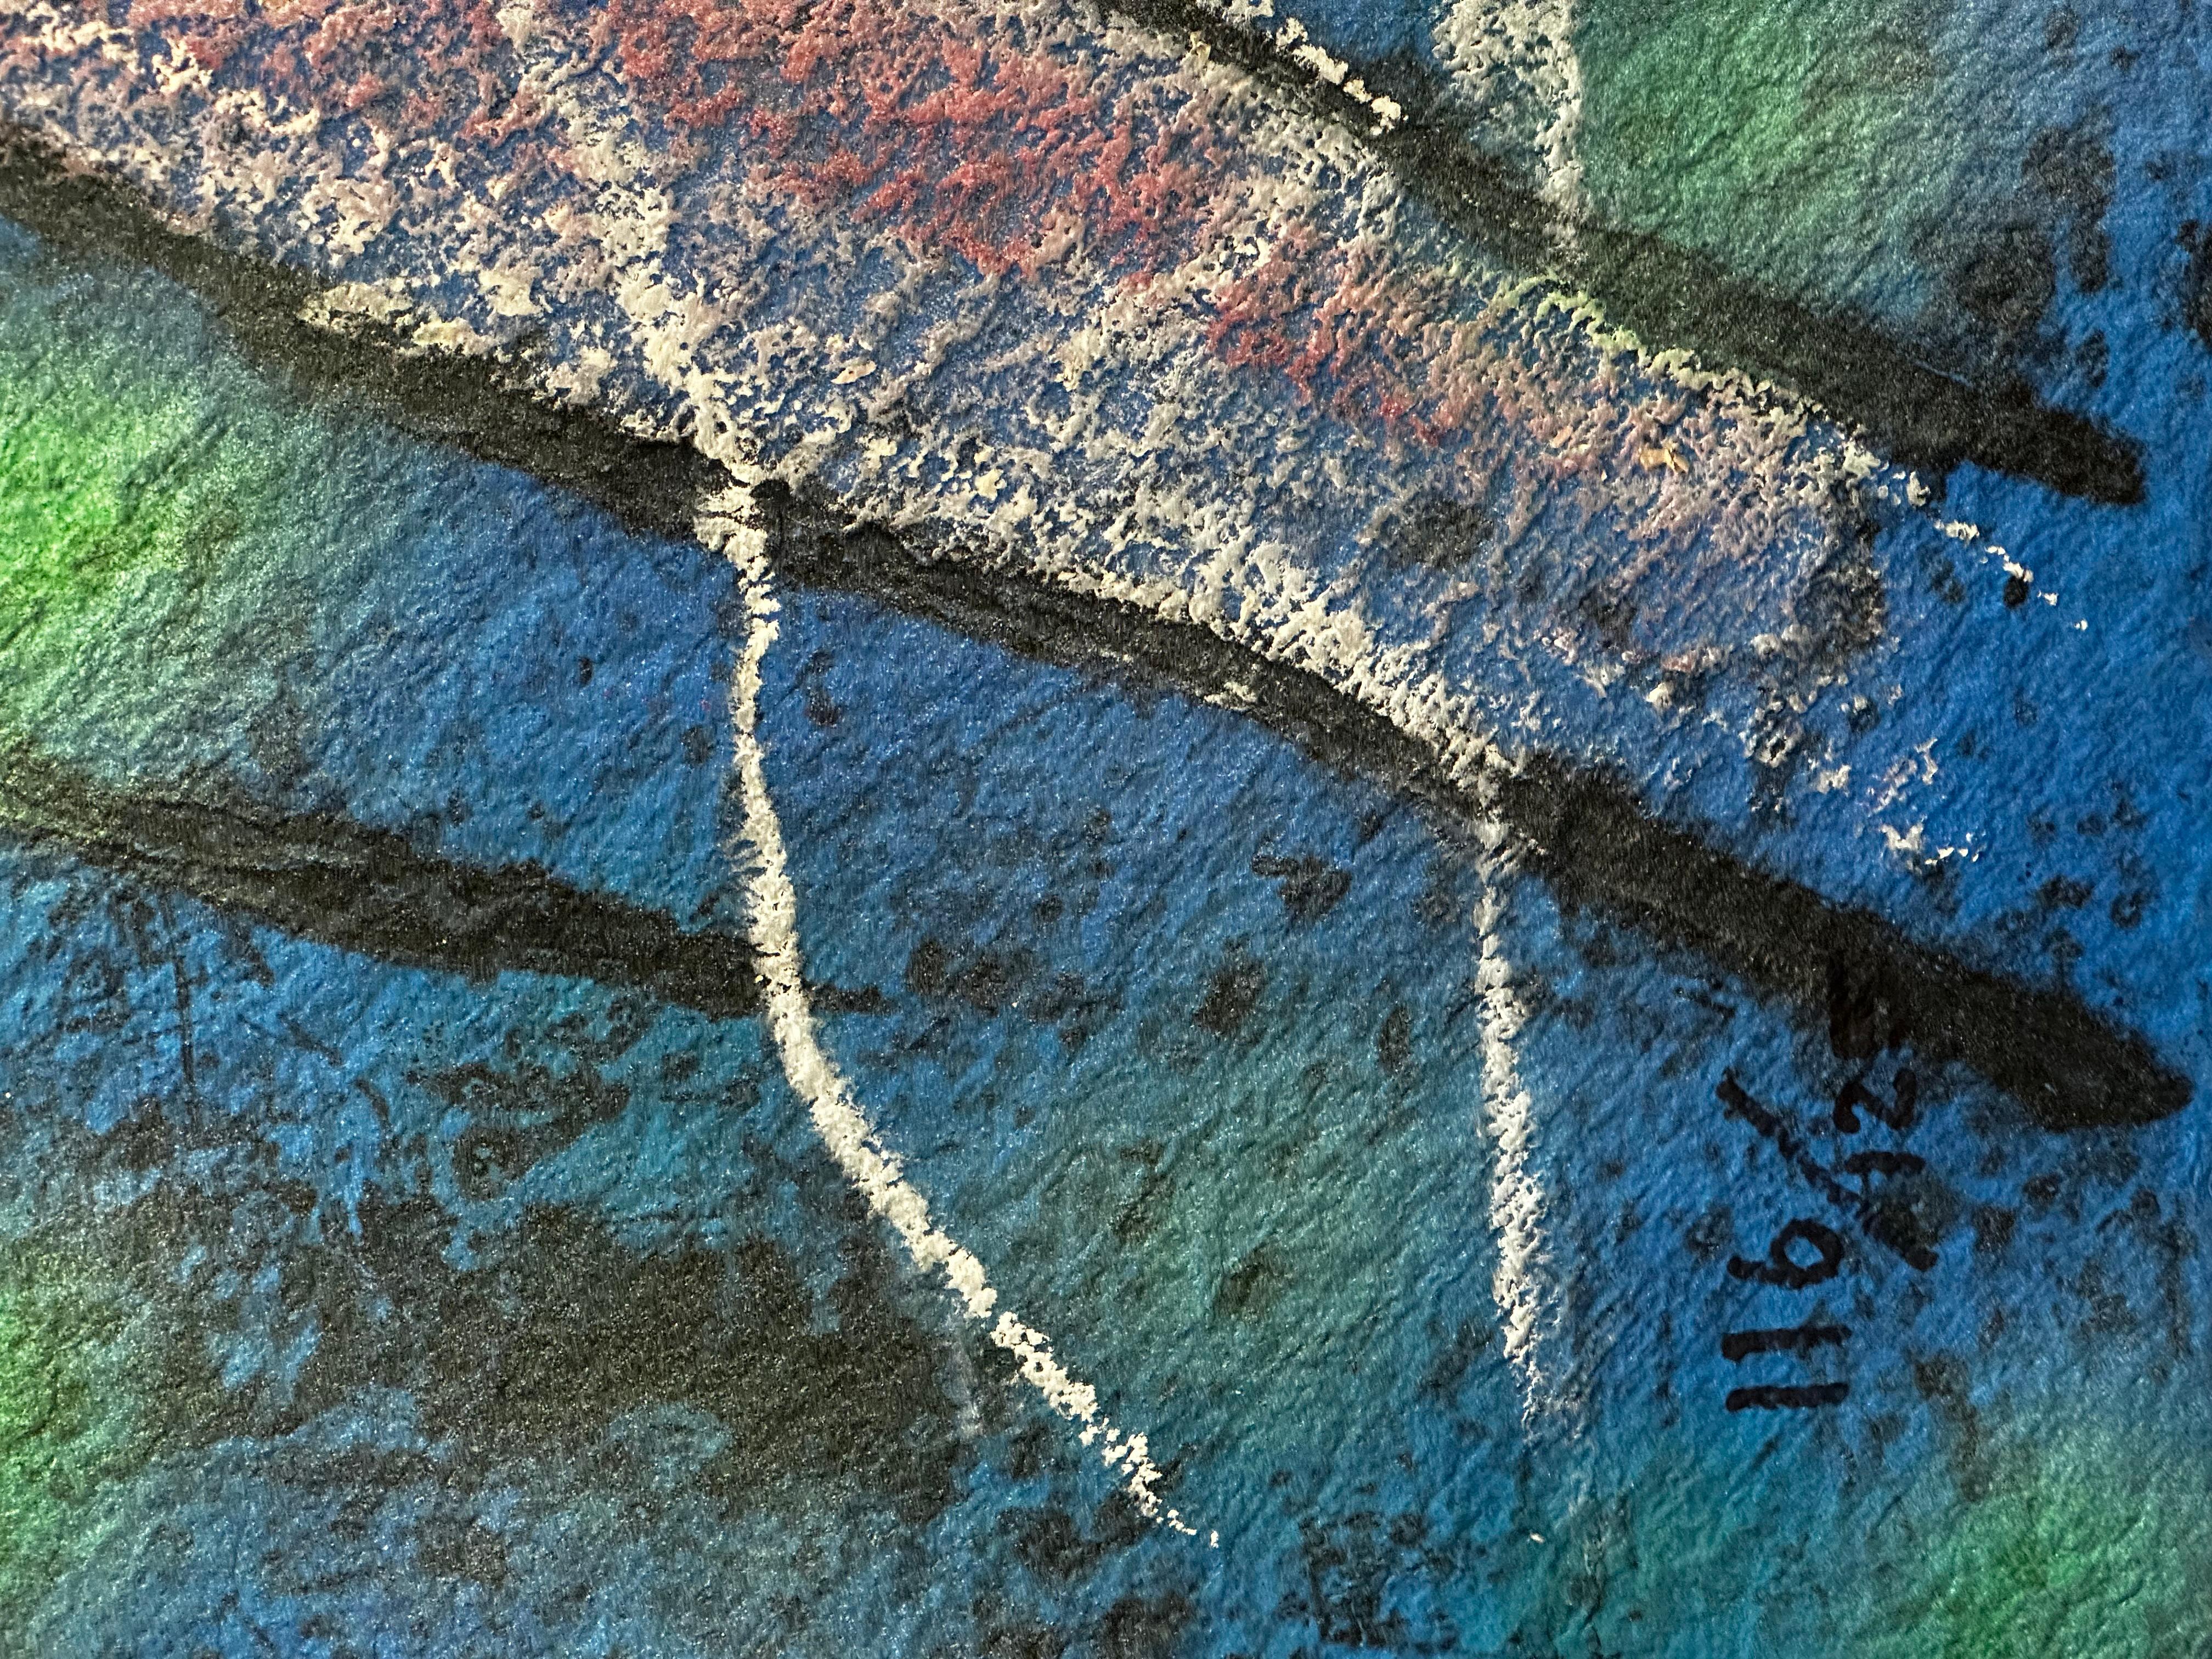 Artist: Roberto Matta
Title: La Dulce Aqua Vita
Medium: Carborundum etching on handmade paper
Signed: Hand Signed
Size: 41 x 48 Inches 
Edition: 116/125
Year: 2002
Notes: Publisher: Nordstamp Fine Art